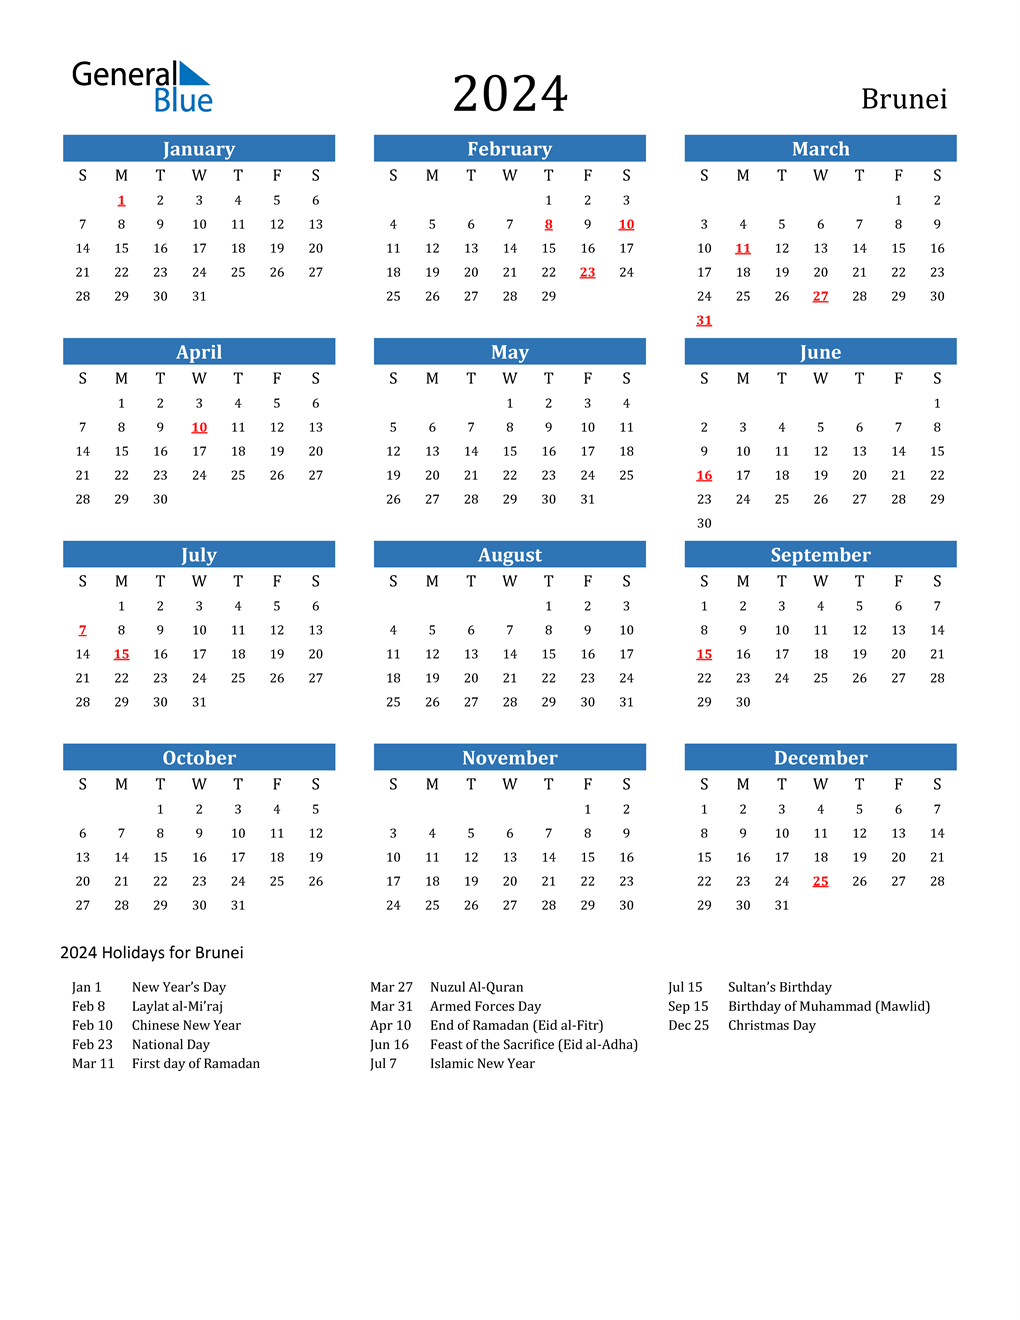 2024 Brunei Calendar with Holidays